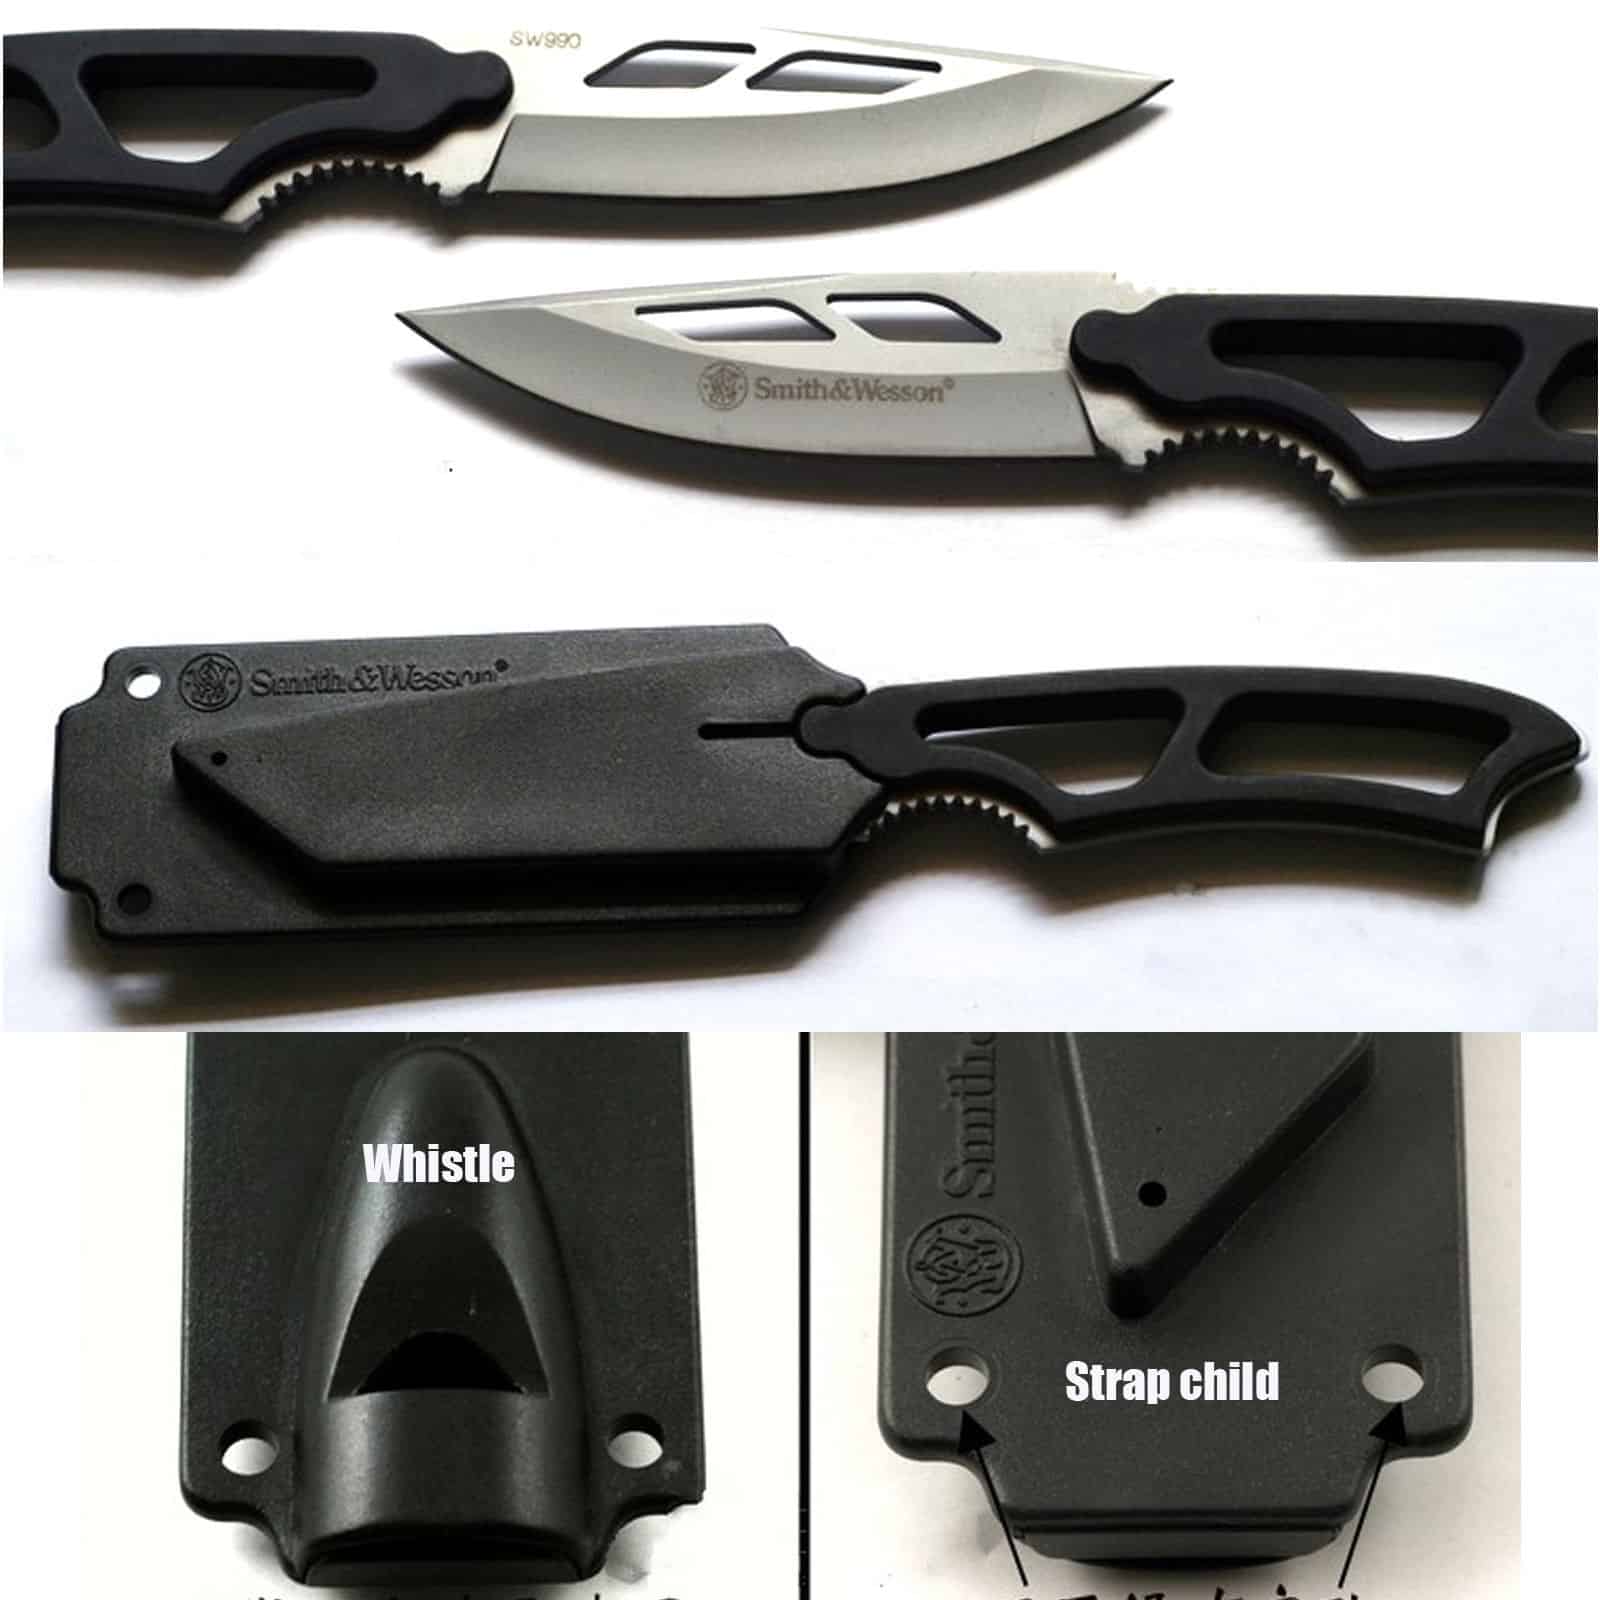 Smith & Wesson Neck Knife (schwarze Klinge) ab günstigen 2,89 Euro inkl. Porto (Preisvergleich: ~25 Euro)!